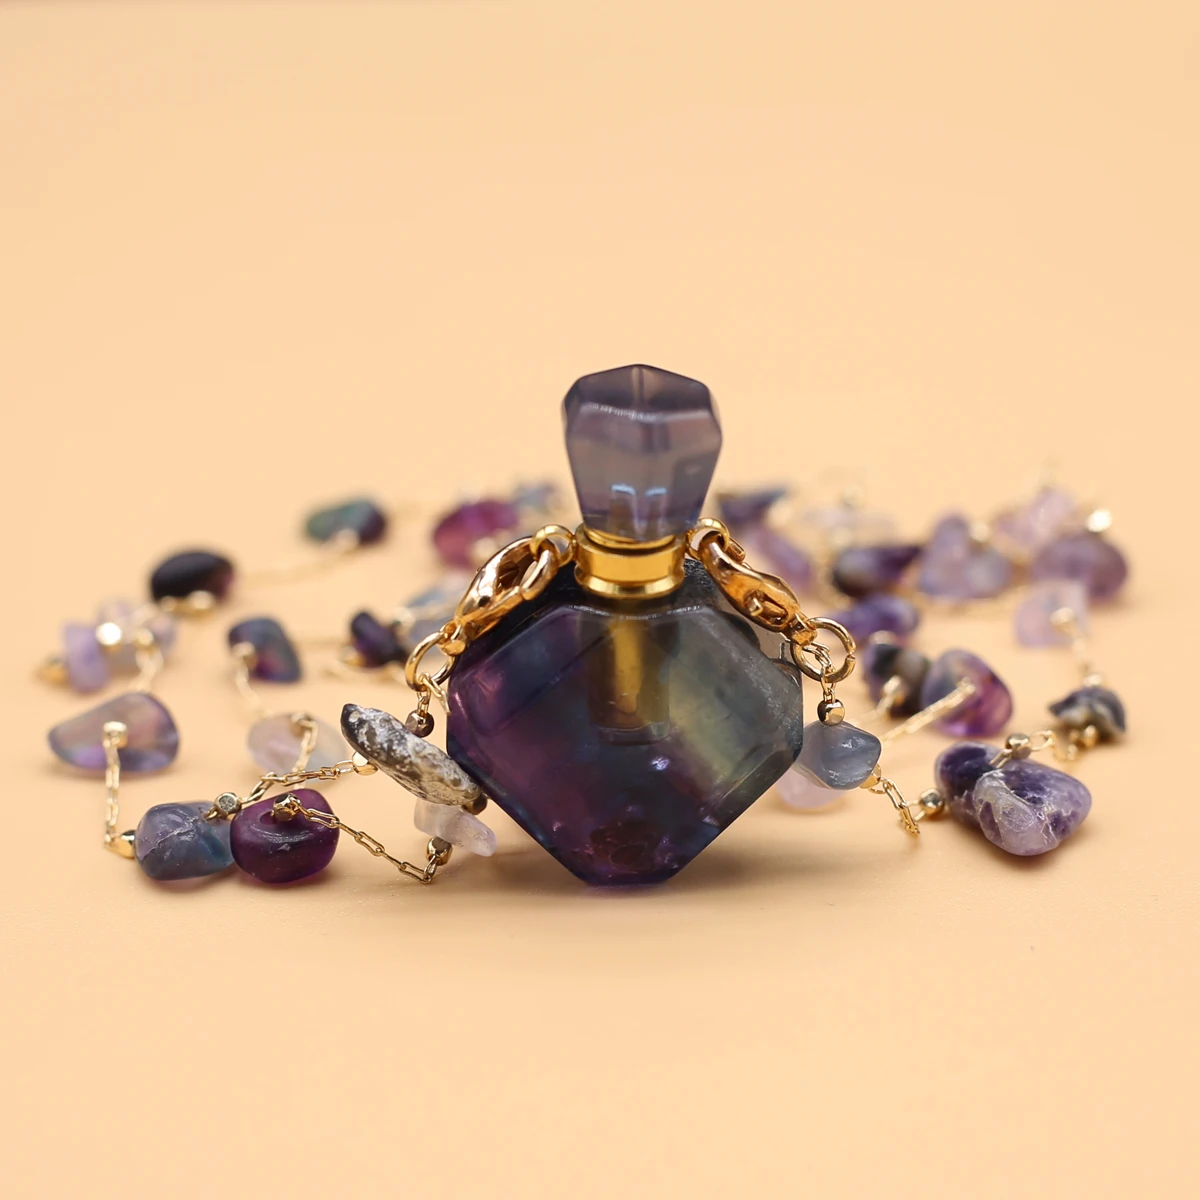 

Natural Stone Fluorite Rhombus Perfume Bottle Diffuser Pendant Necklace Craft Jewelry MakingDIY Hanging Accessory Gift Decor80CM